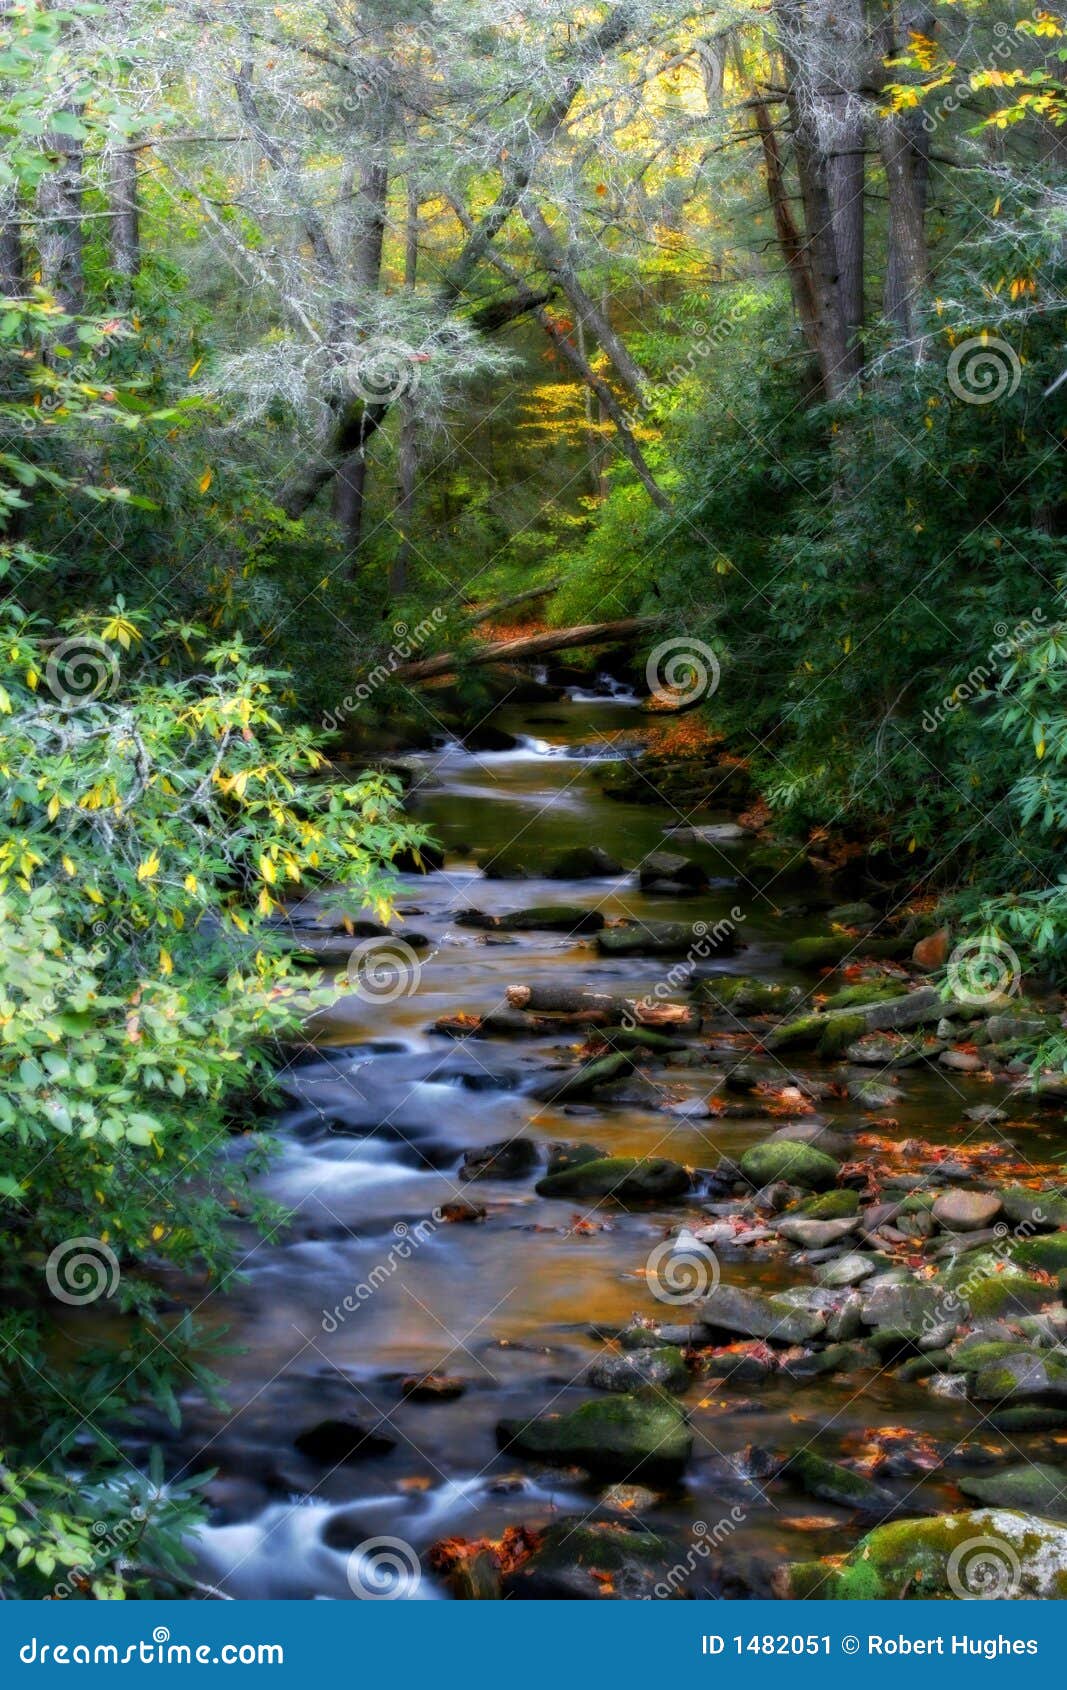 mountain stream art